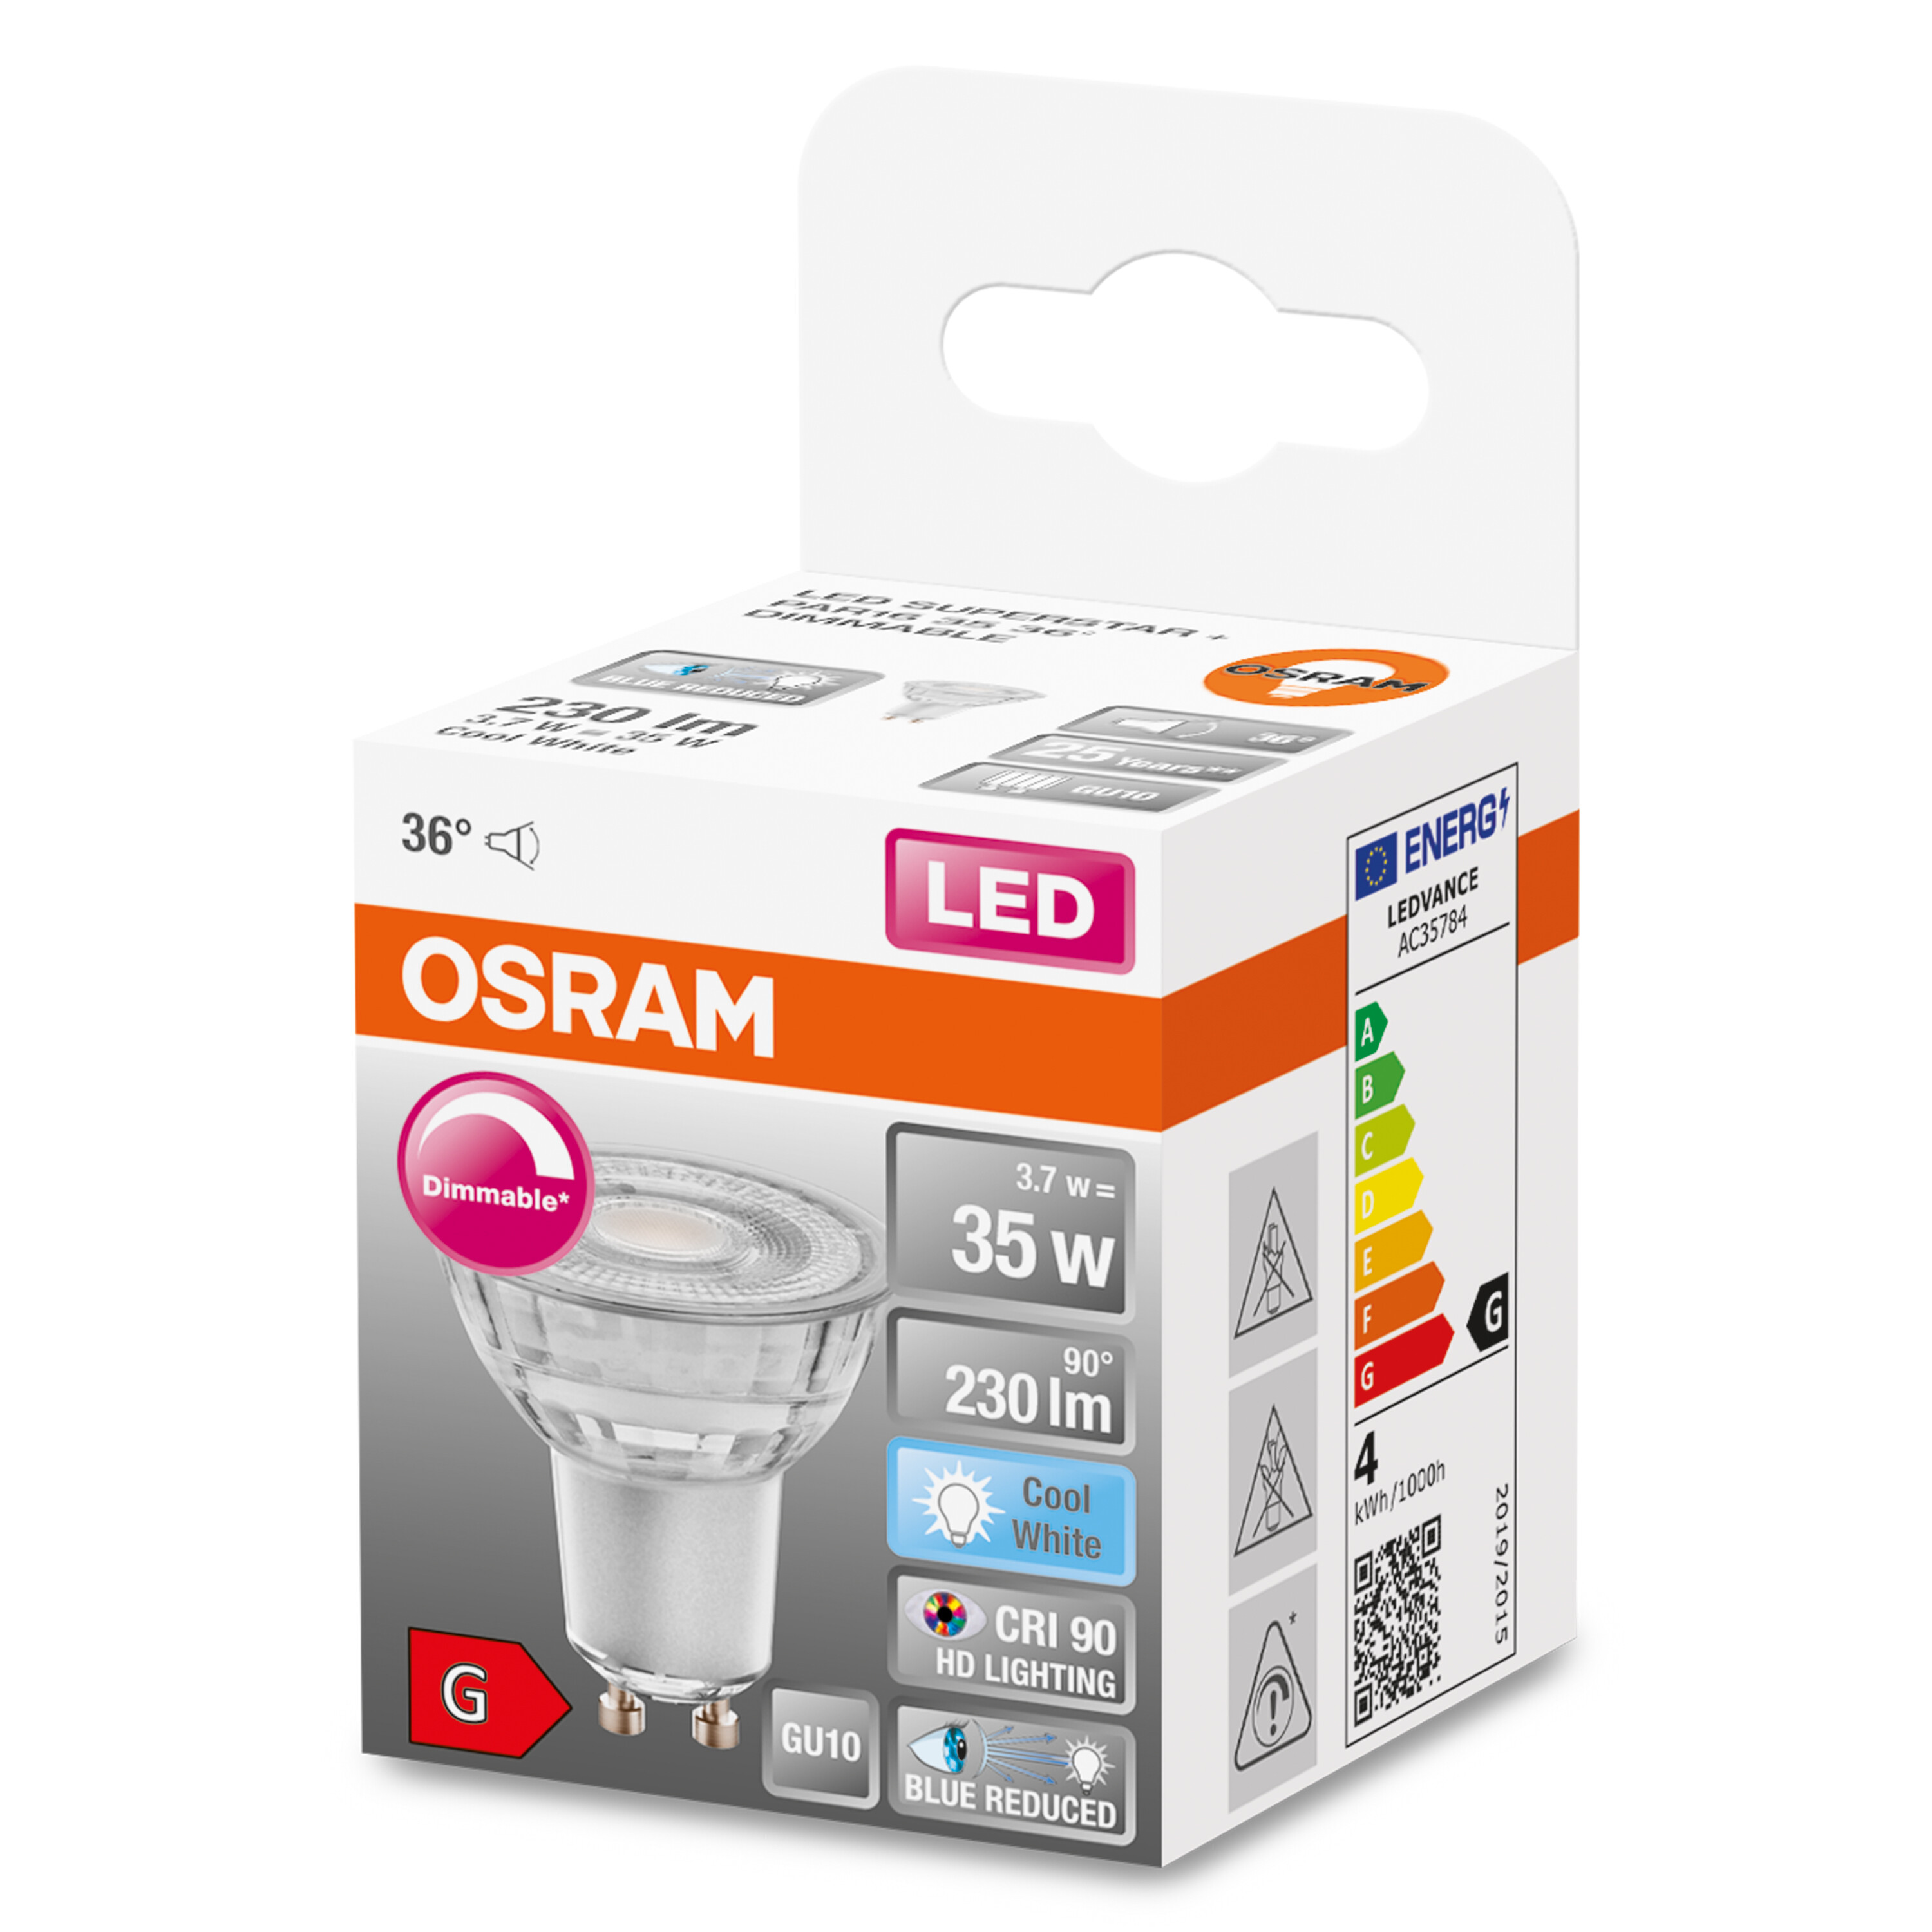 OSRAM  LED SUPERSTAR PLUS REFLECTOR 230 LED PAR16 Lumen Kaltweiß Reflektor-Lampe